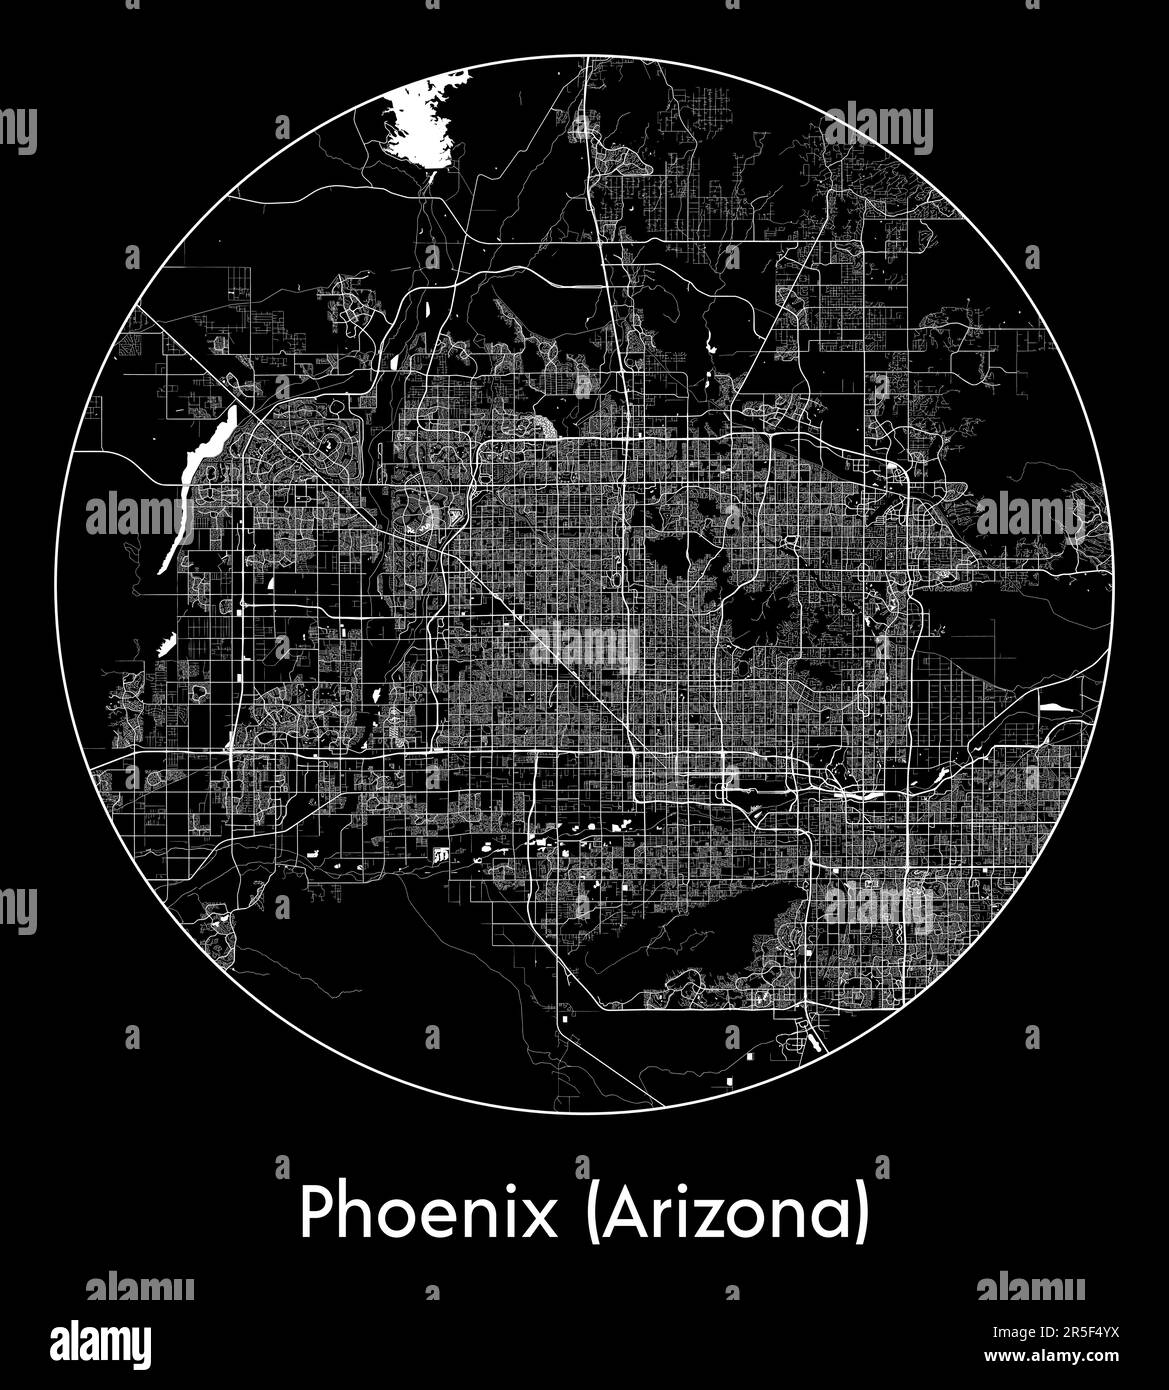 City Map Phoenix (Arizona) United States North America vector ...